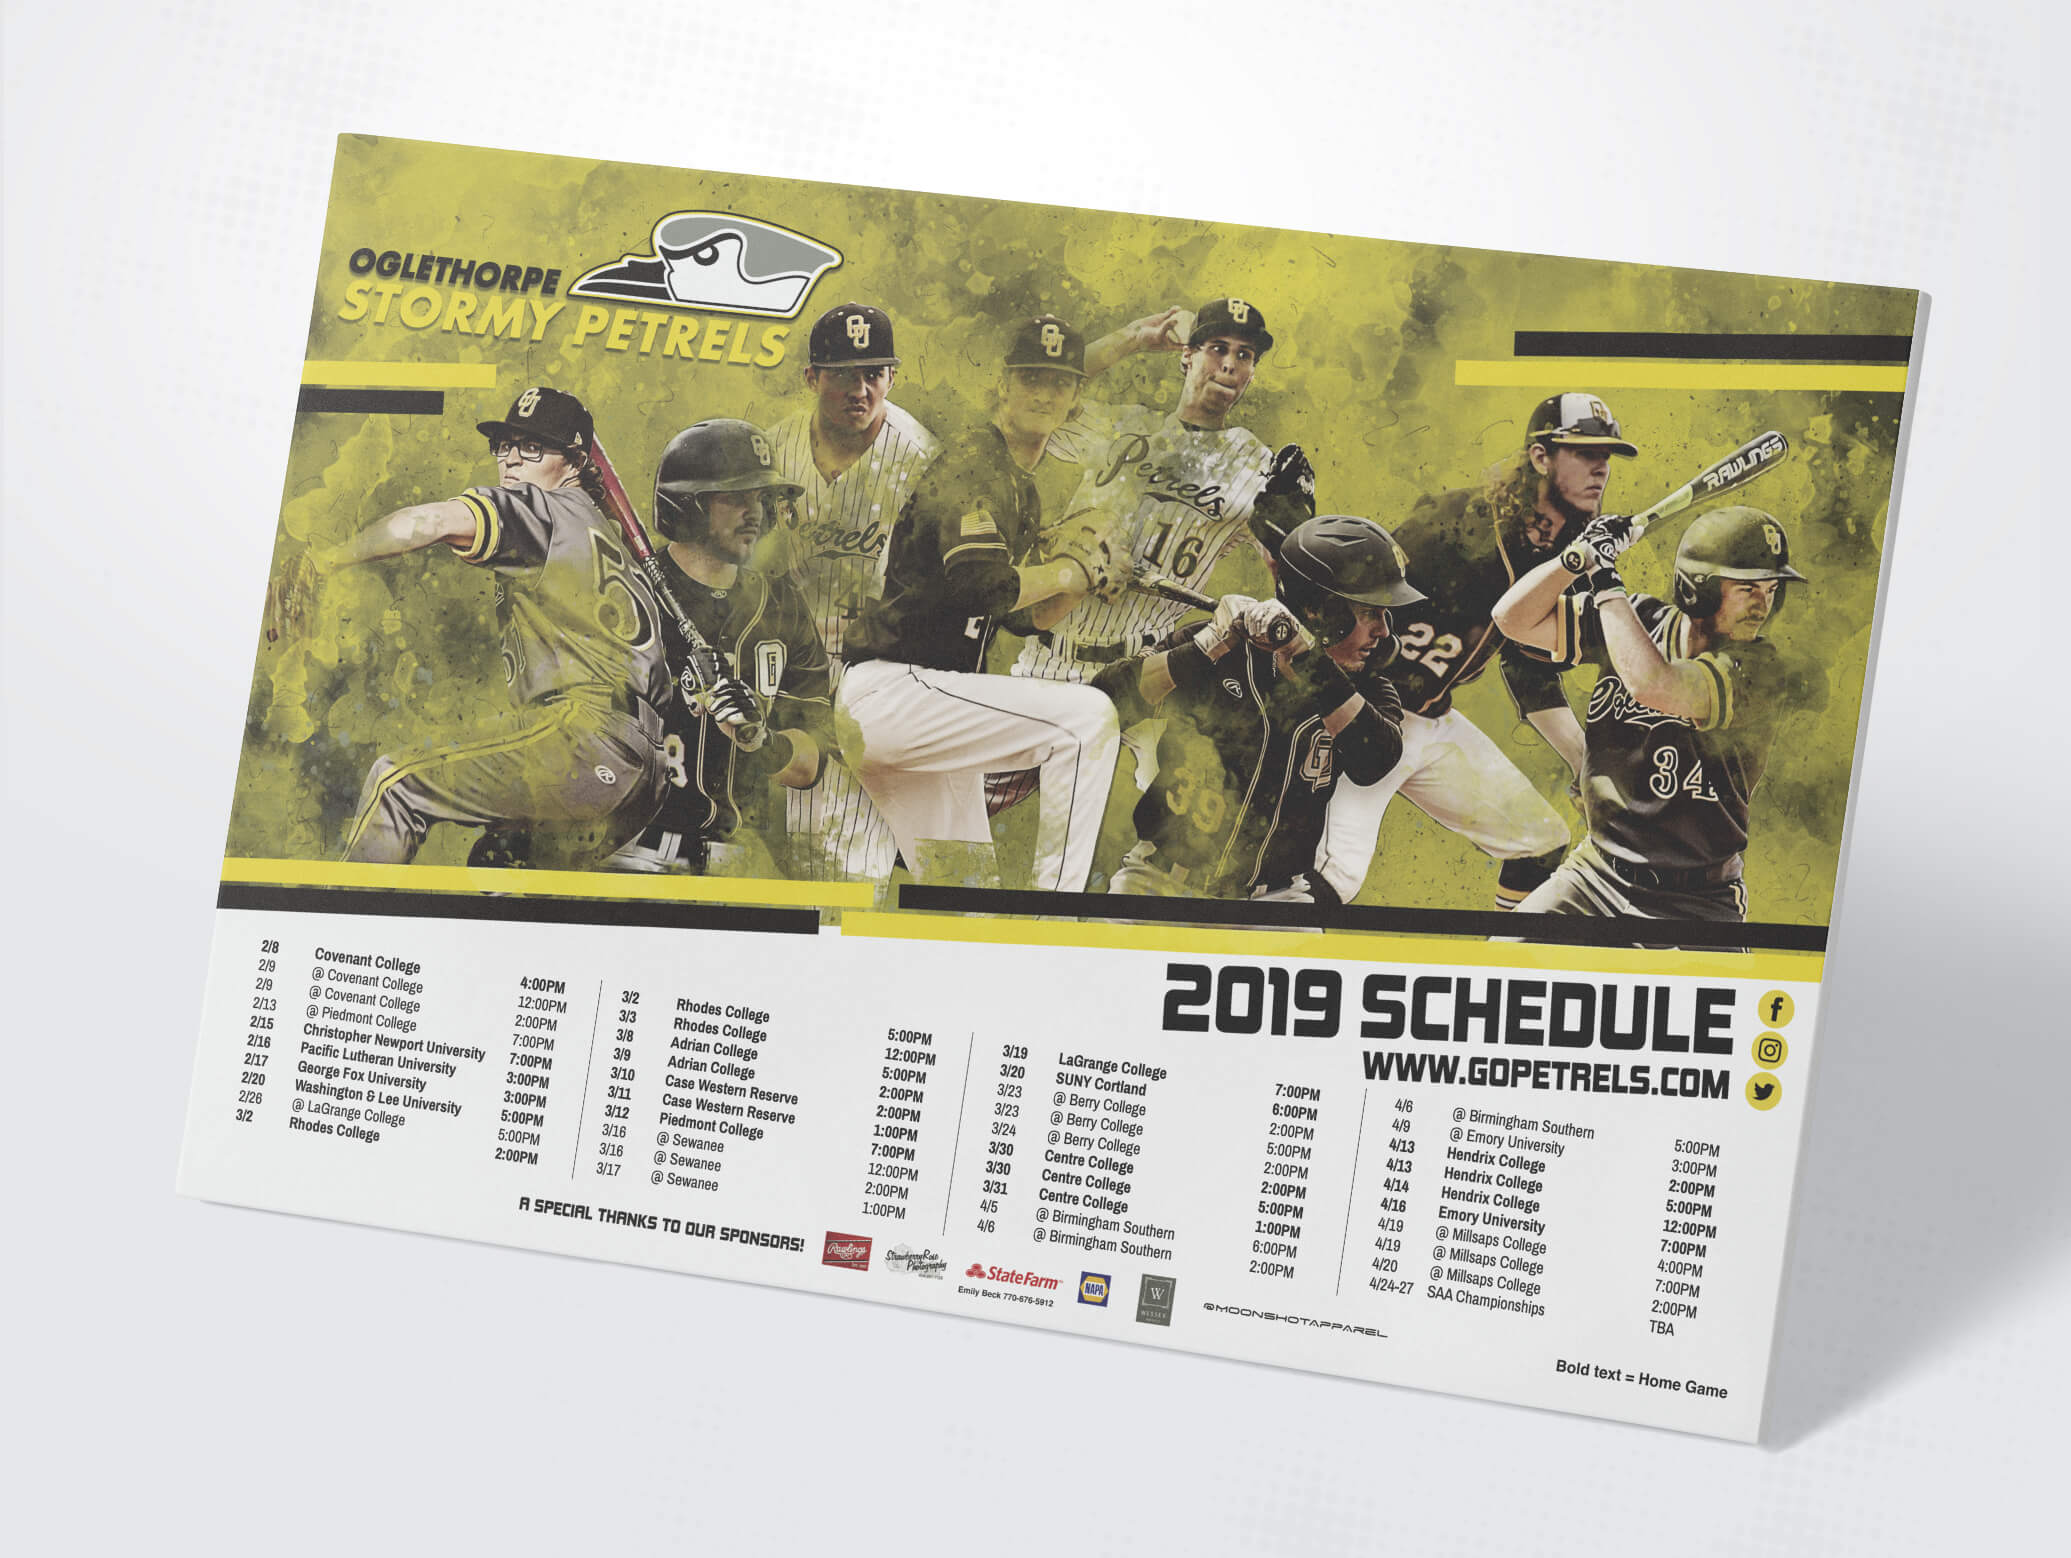 oglethorpe university baseball schedule poster